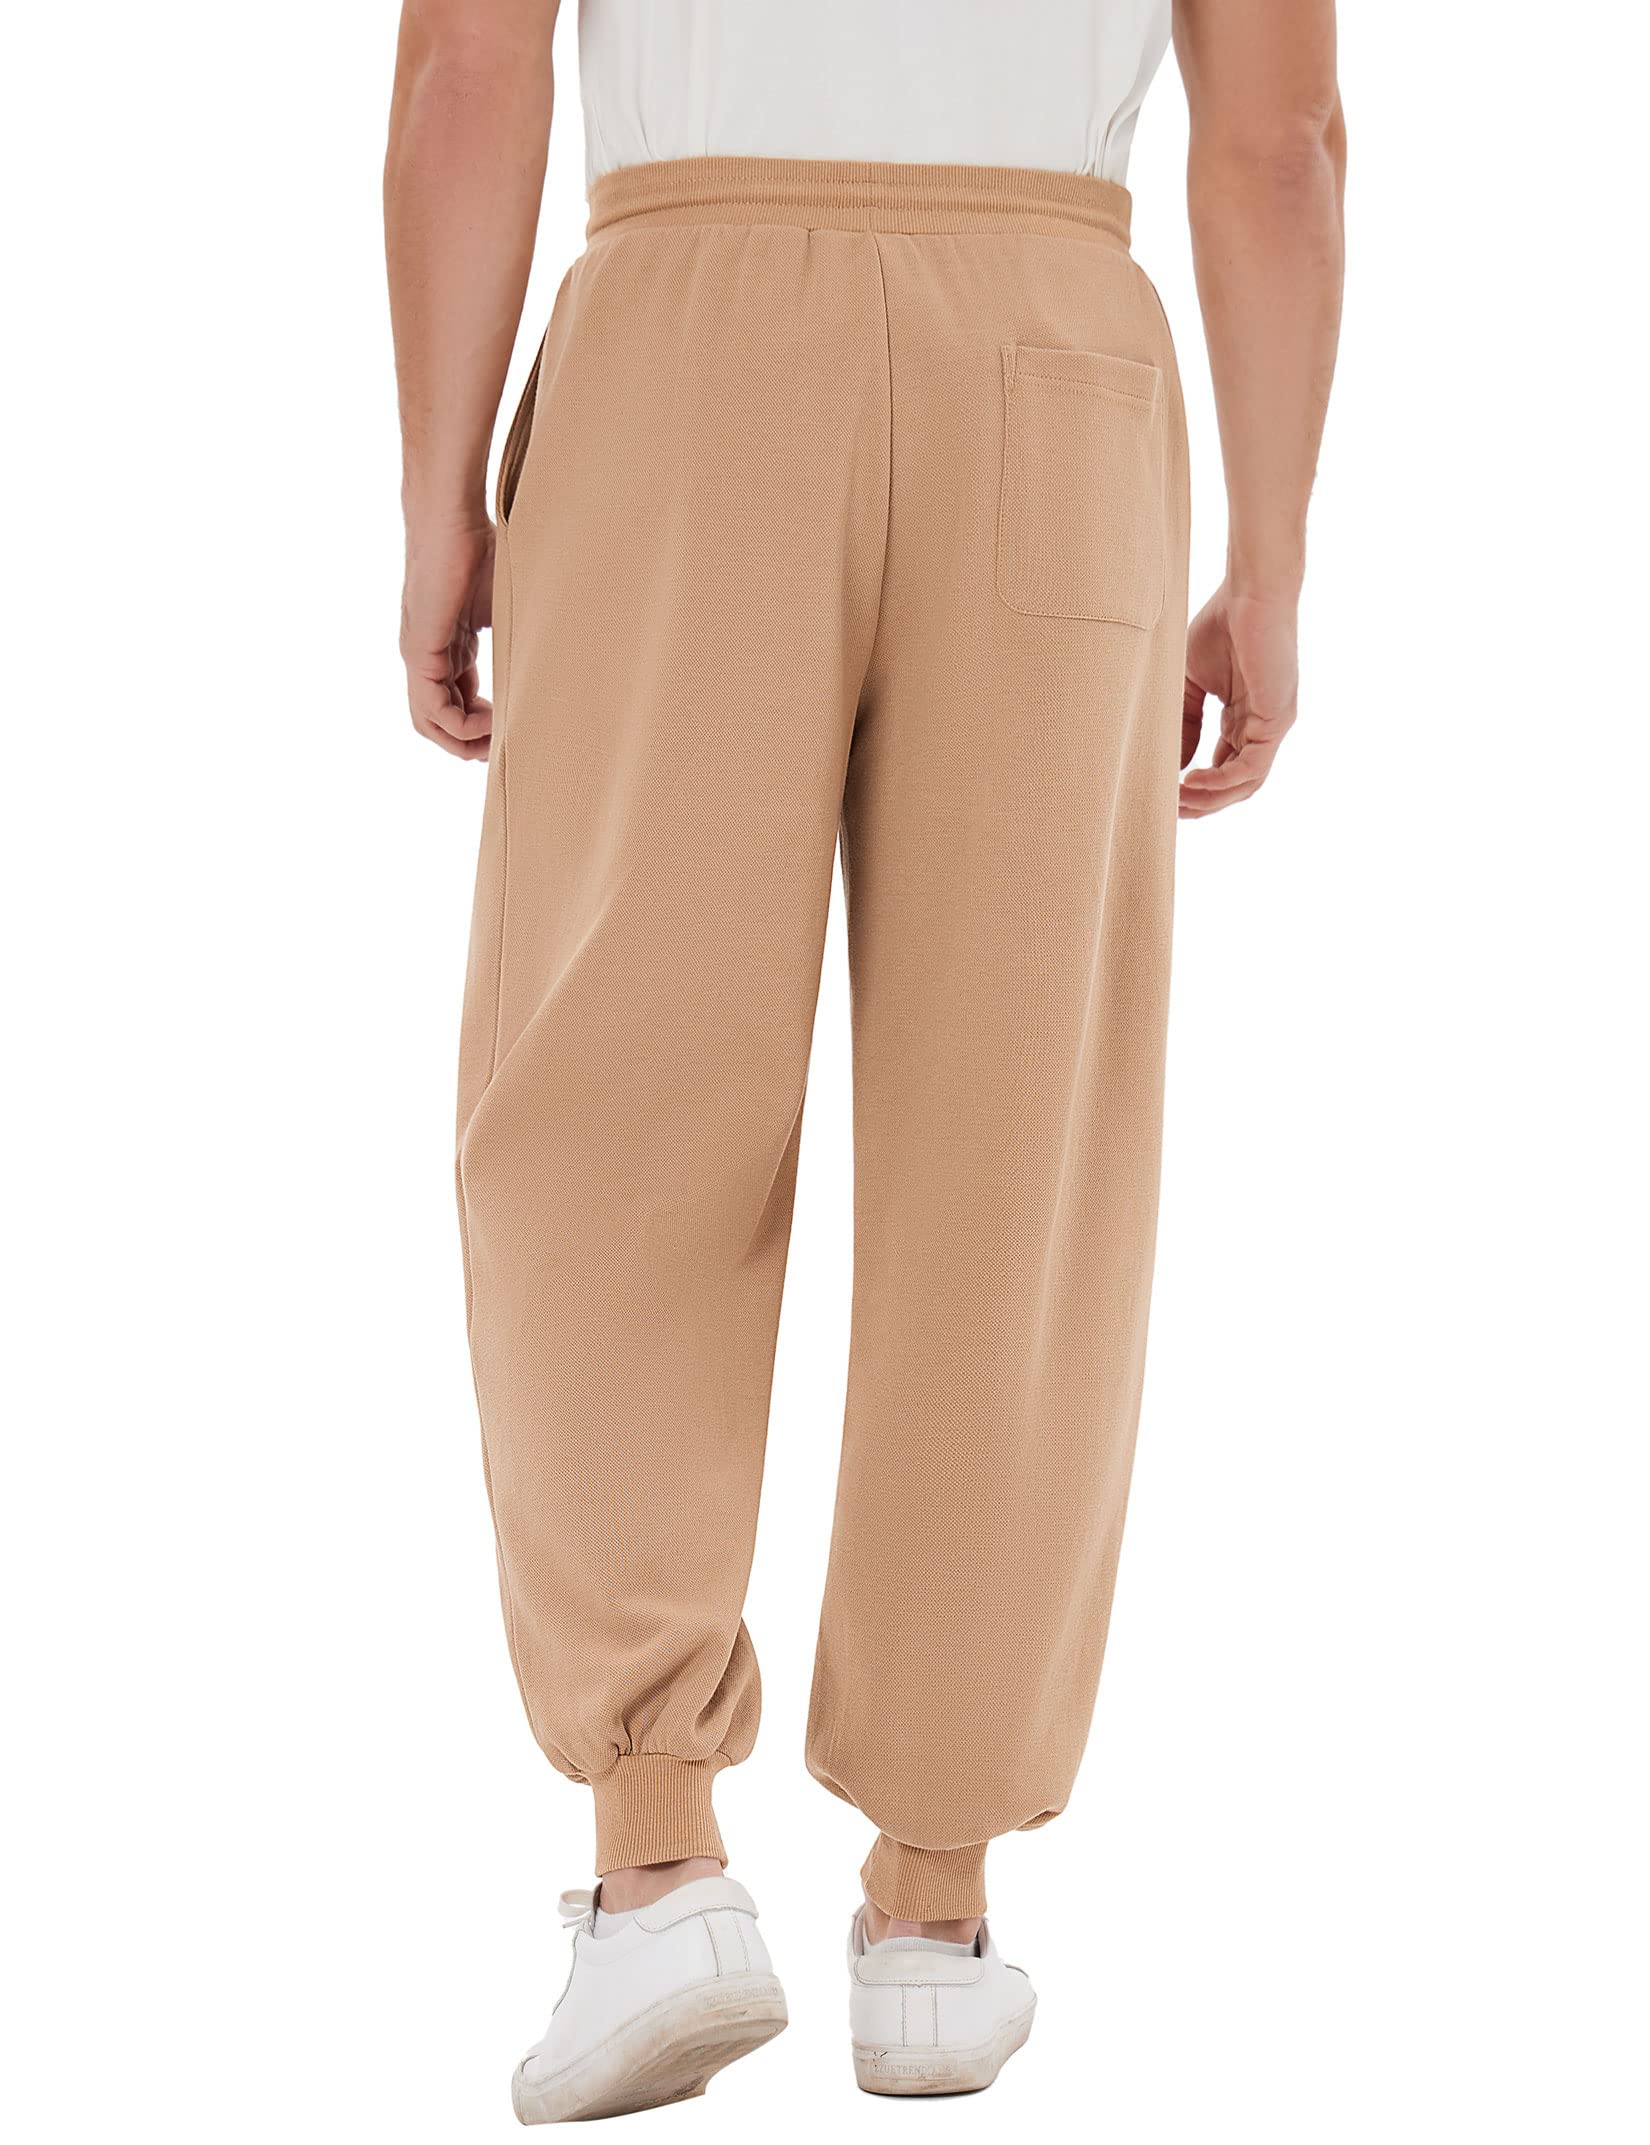 GymSmart Men's Casual Lounge Pajama Yoga Jogger Pants Open Bottom Sweatpants with Pockets